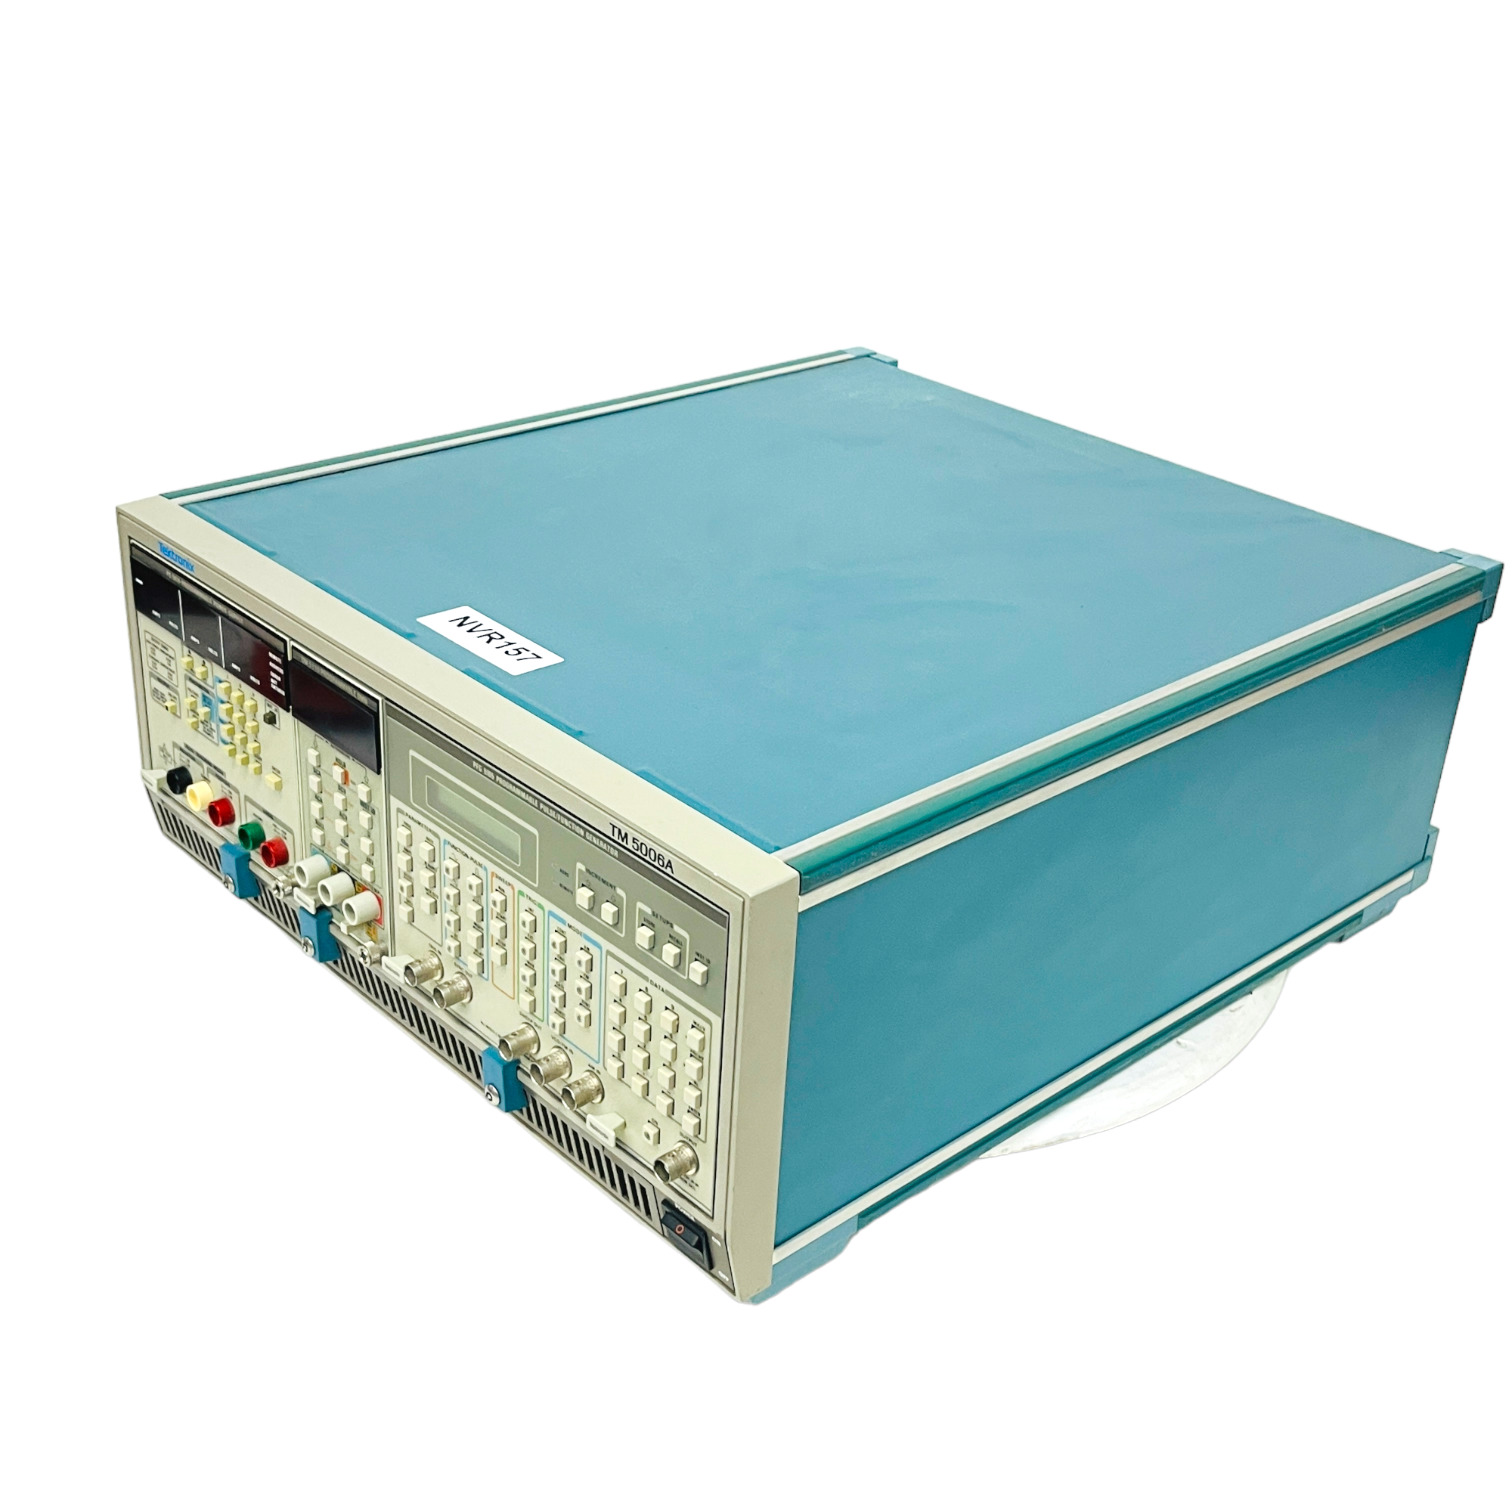 Tektroix TM5006A Main Frame, PS5010 PSU, DM5110 DMM, PFG5105 Function Generator